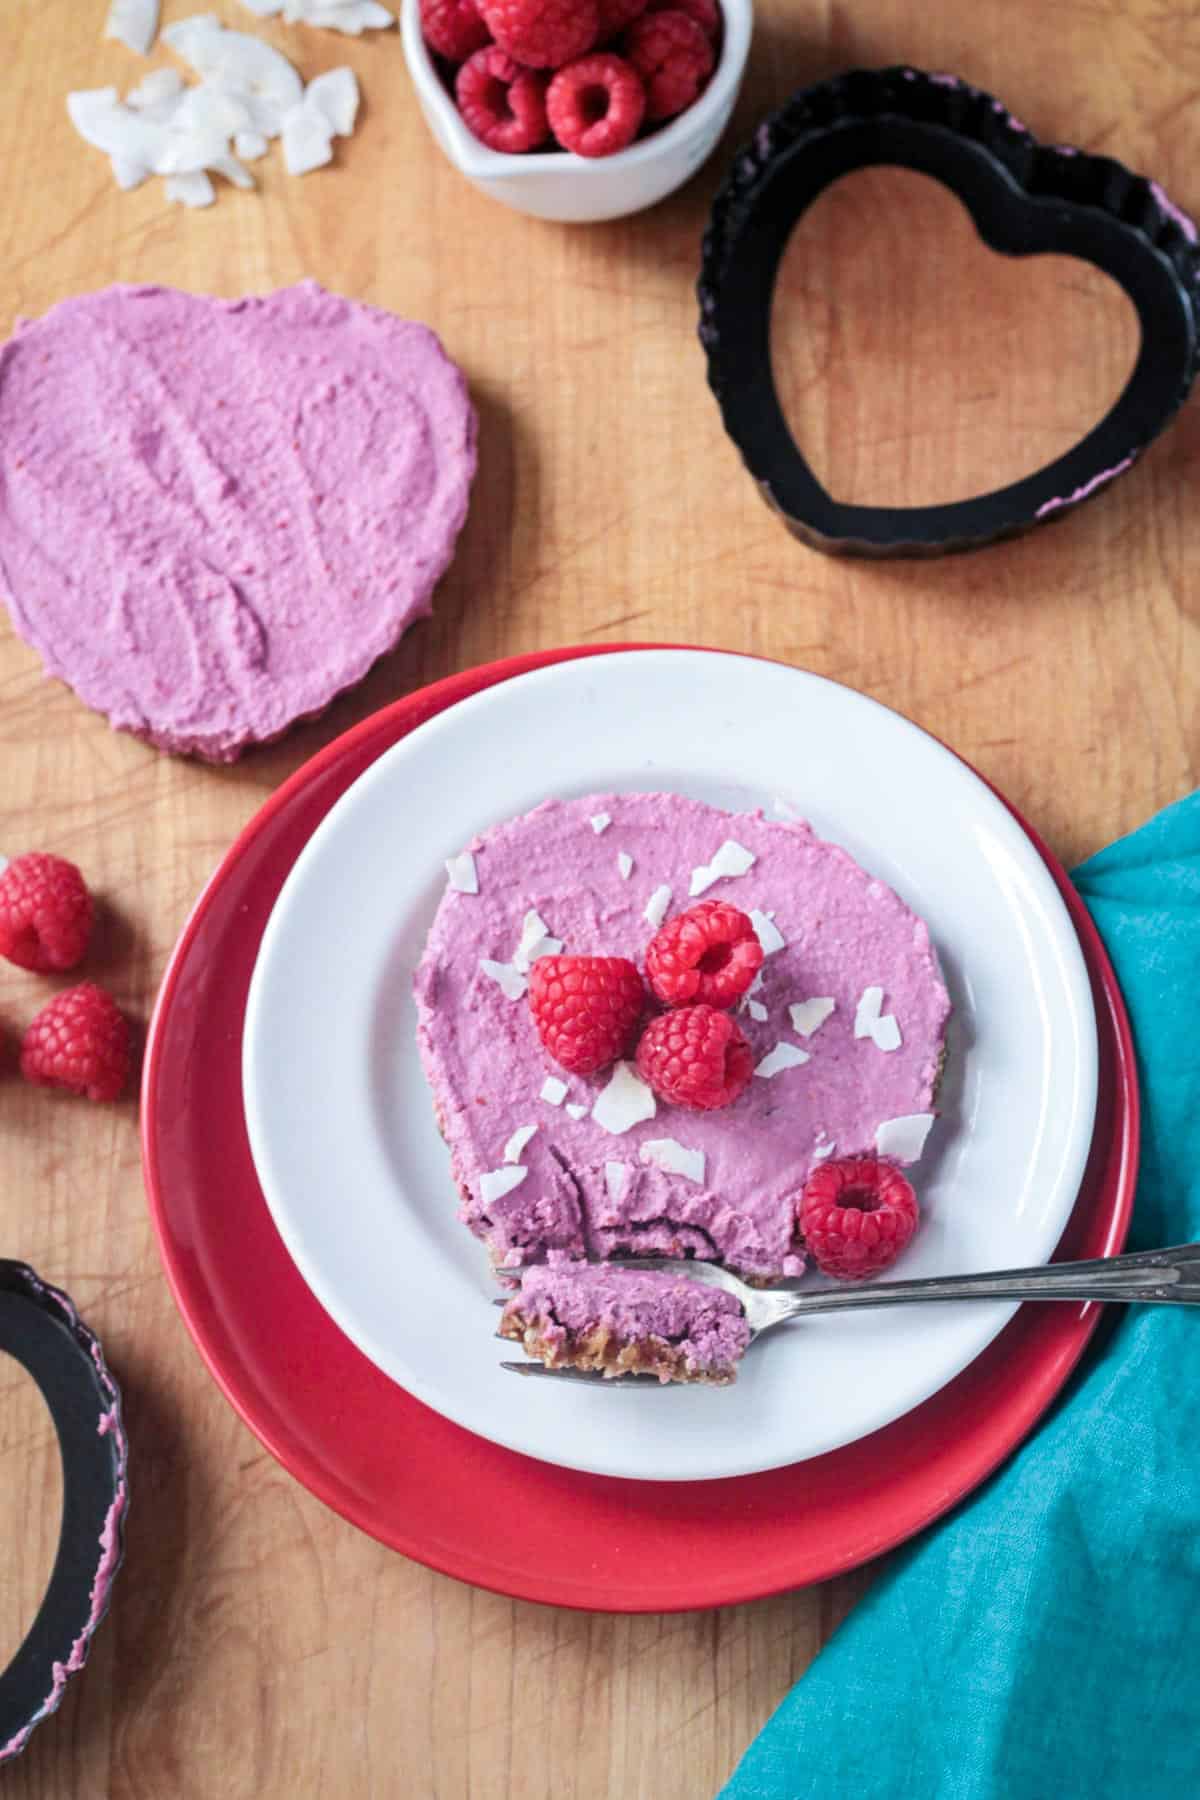 Bite of raspberry vegan cheesecake on a fork.